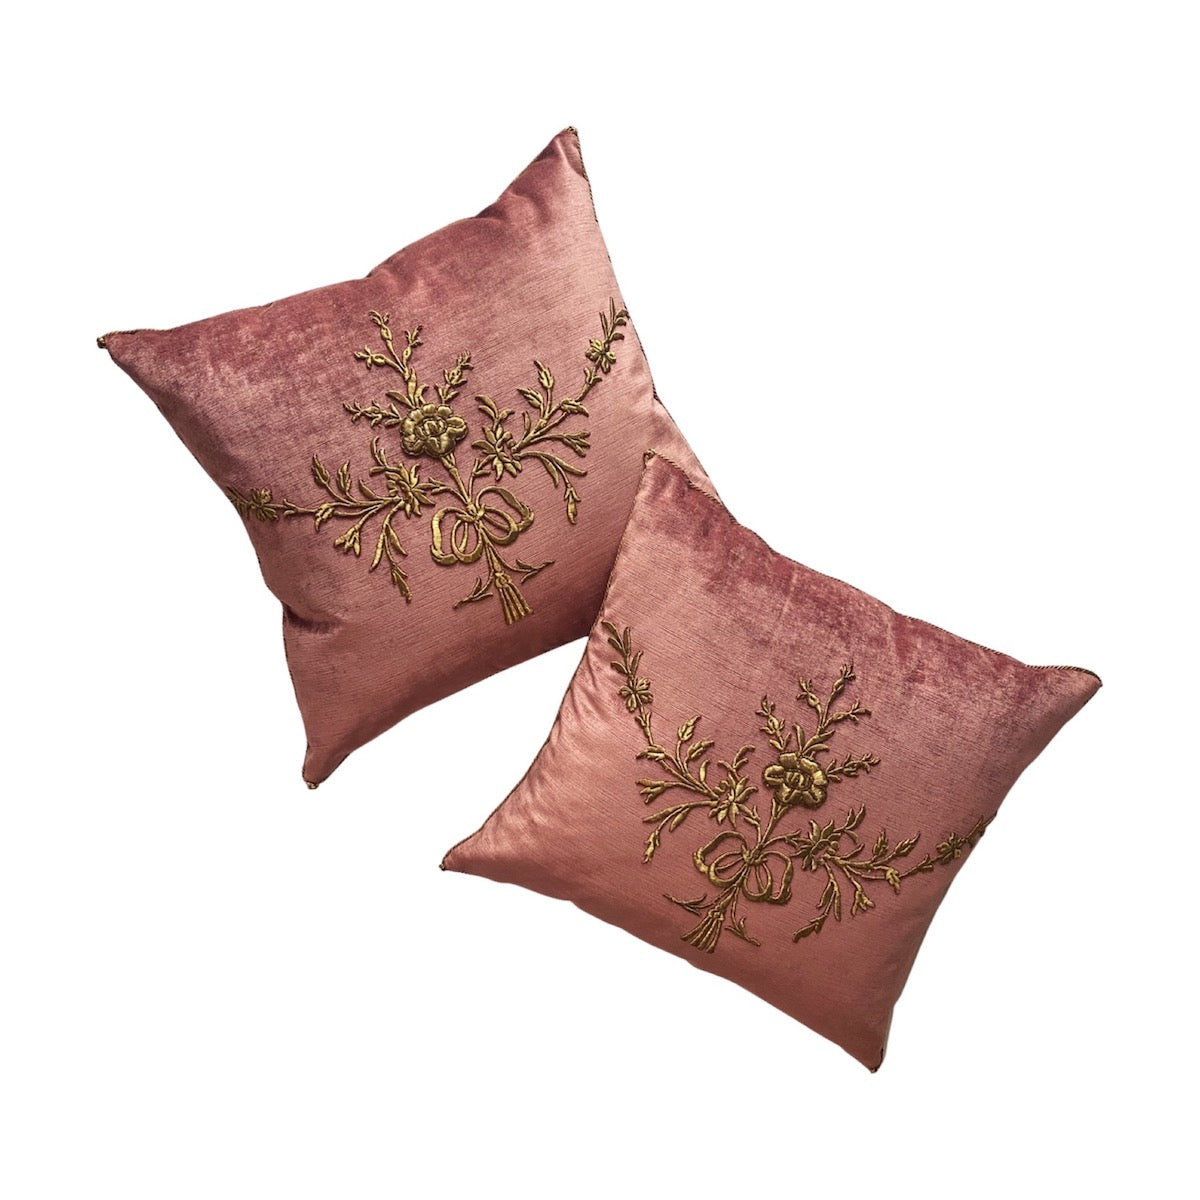 Antique Ottoman Empire Raised Gold Metallic Embroidery (#E050322A&B | 20 x 21 1/2") Pillow Pair B. Viz Design 